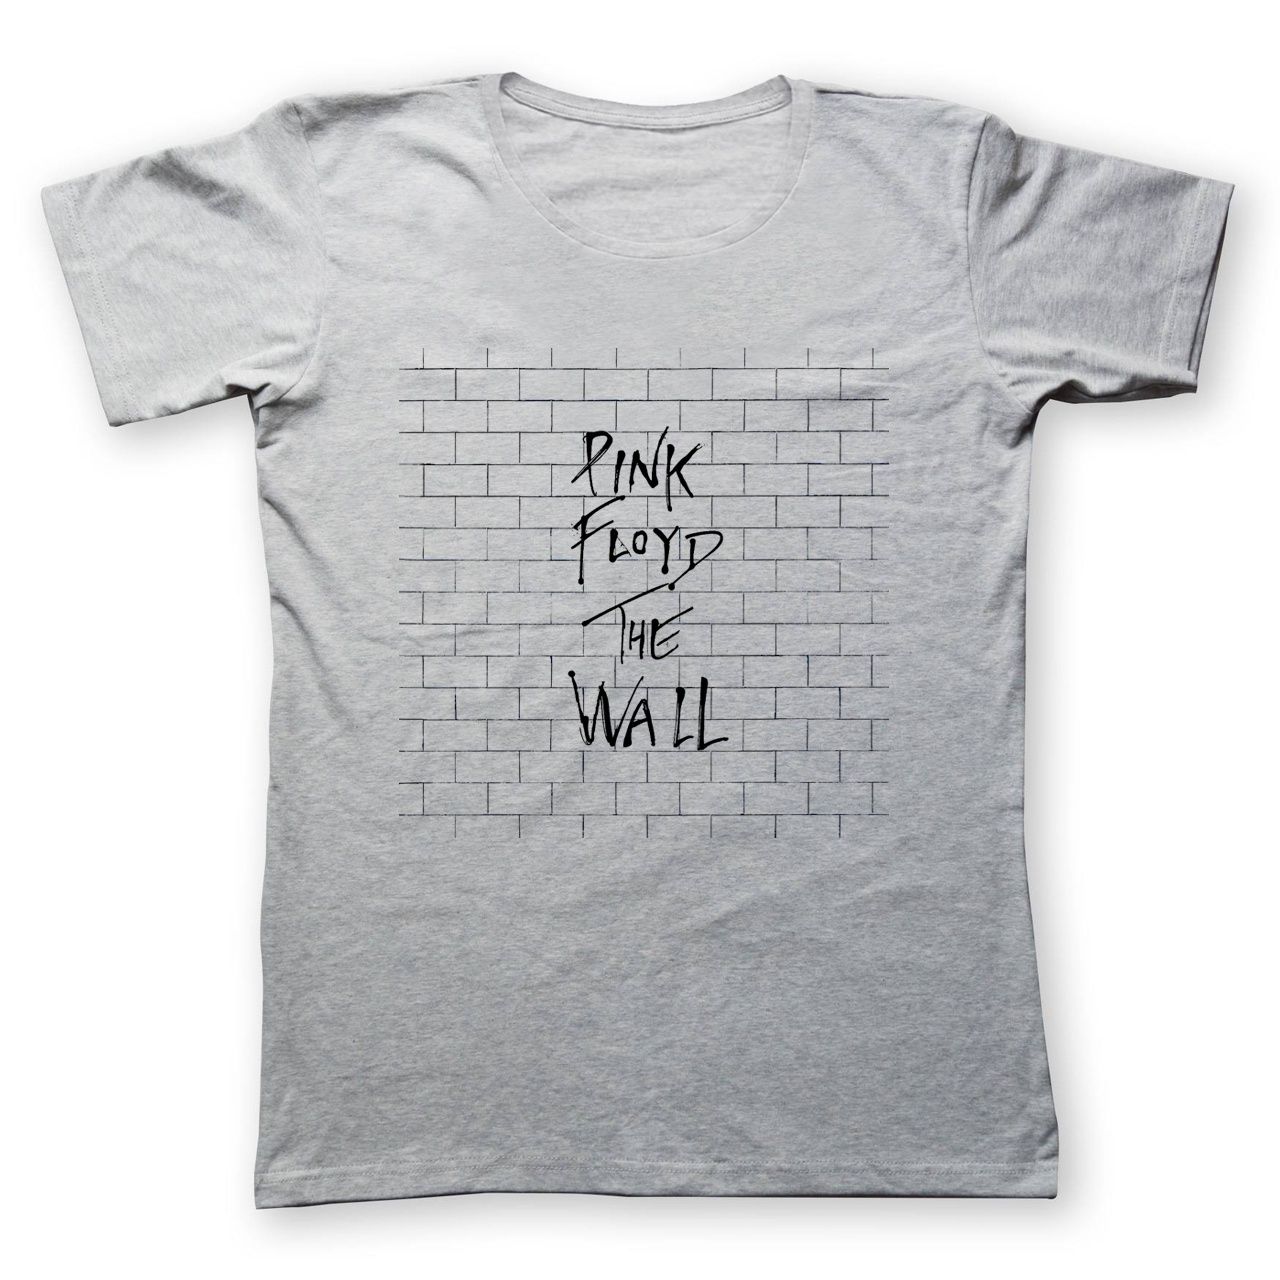 تی شرت زنانه به رسم طرح دیوار کد 479 -  - 1